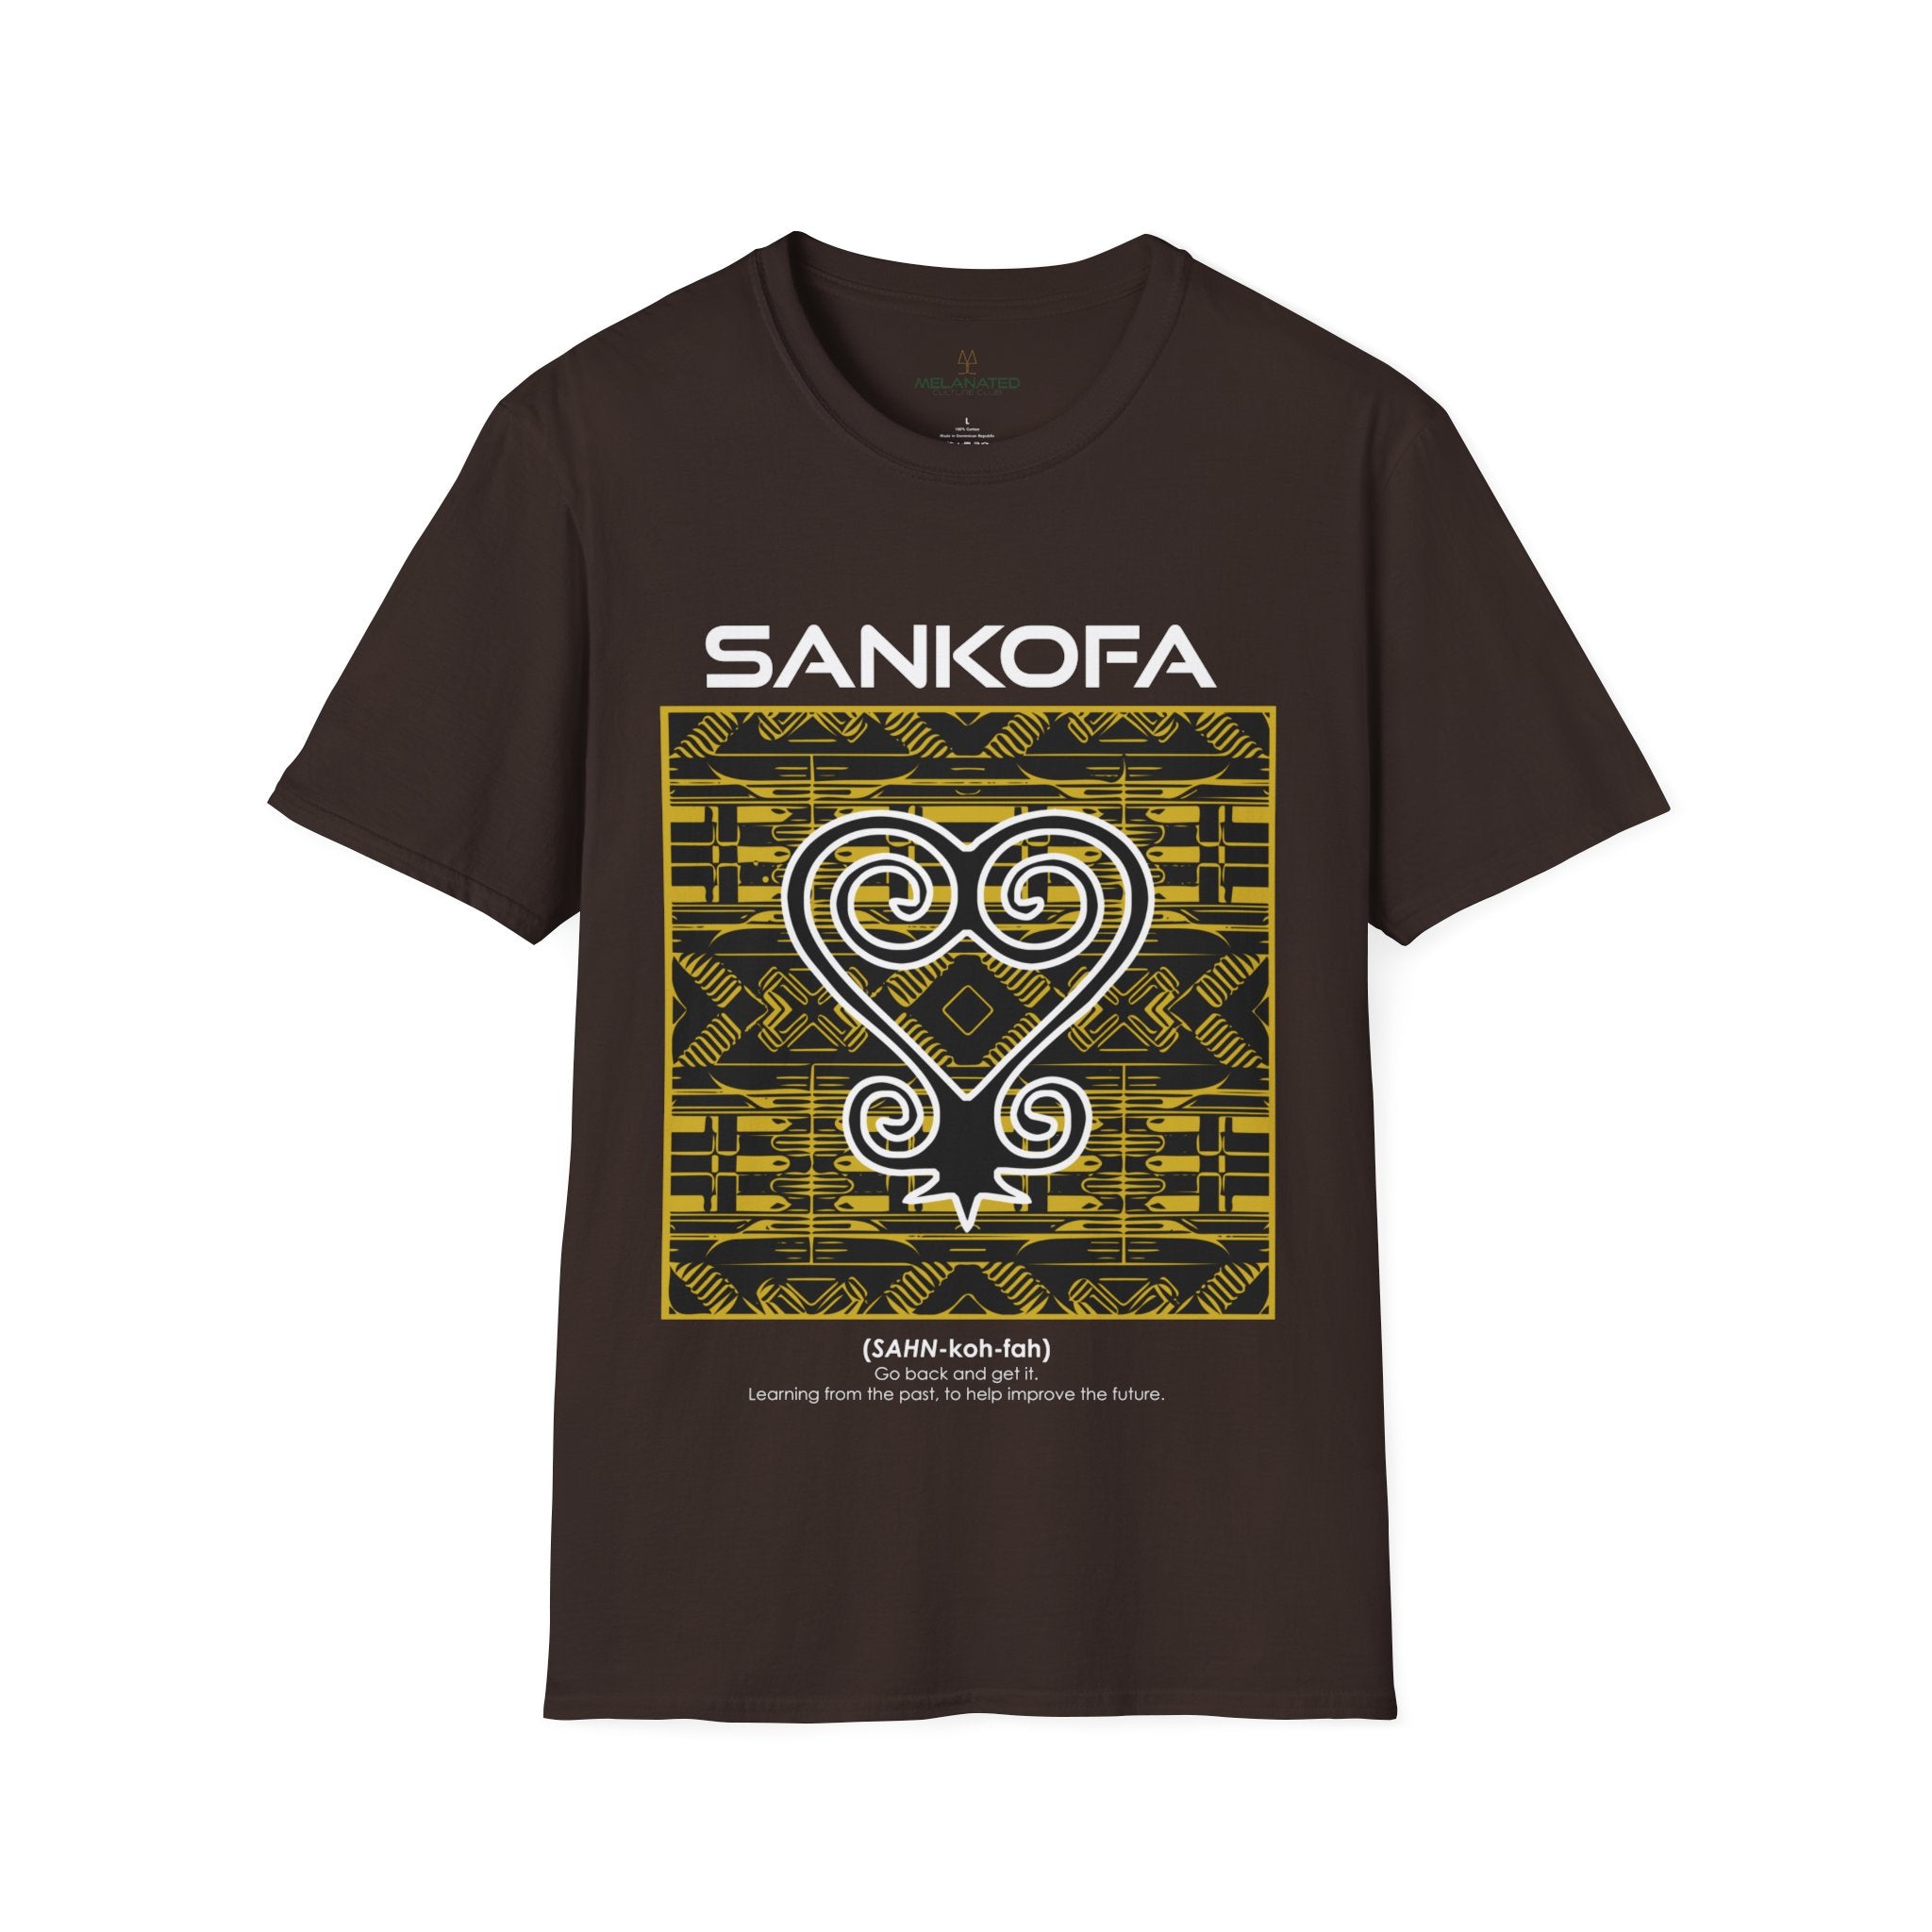 Adinka Sankofa African Tee Shirt in brown.